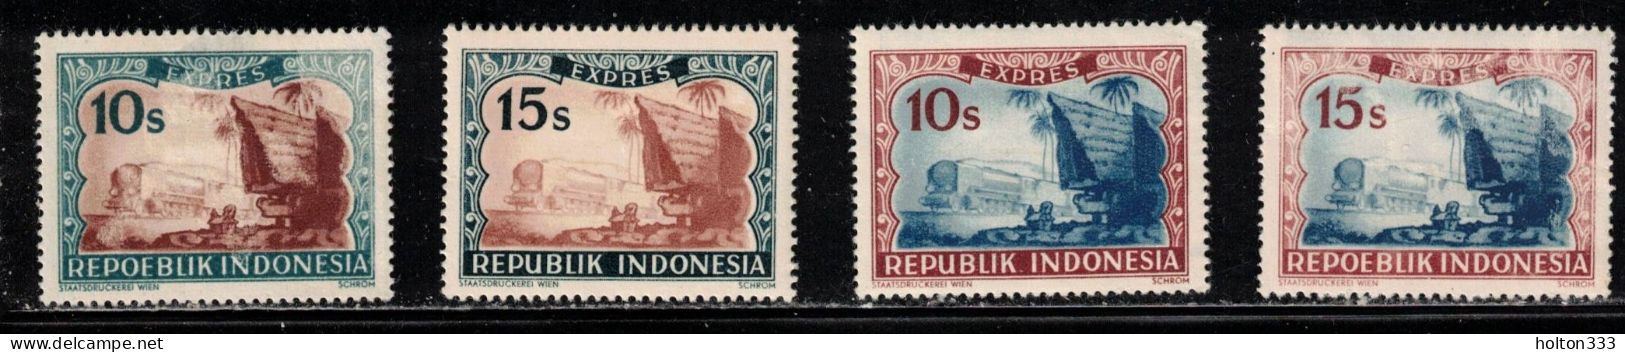 INDONESIA Scott # E1, E1A, E1B, E1C MH - Special Delivery Stamps - Indonesia